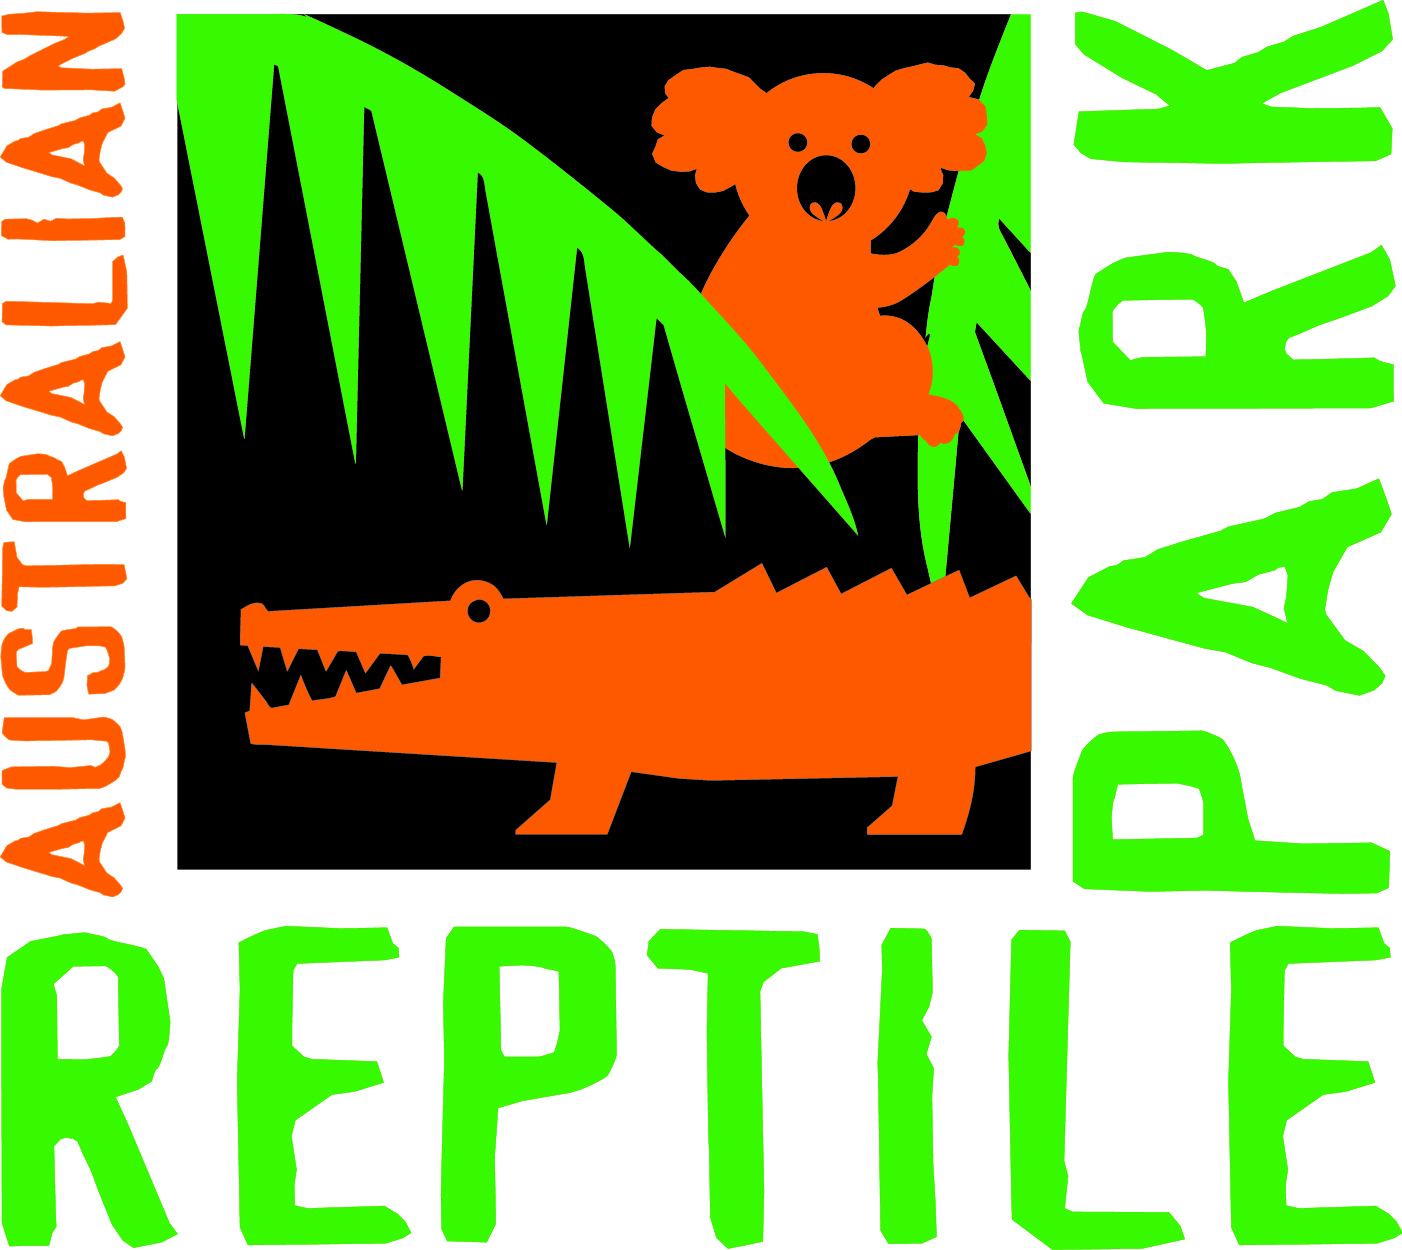 Australian Reptile Park - Find Attractions